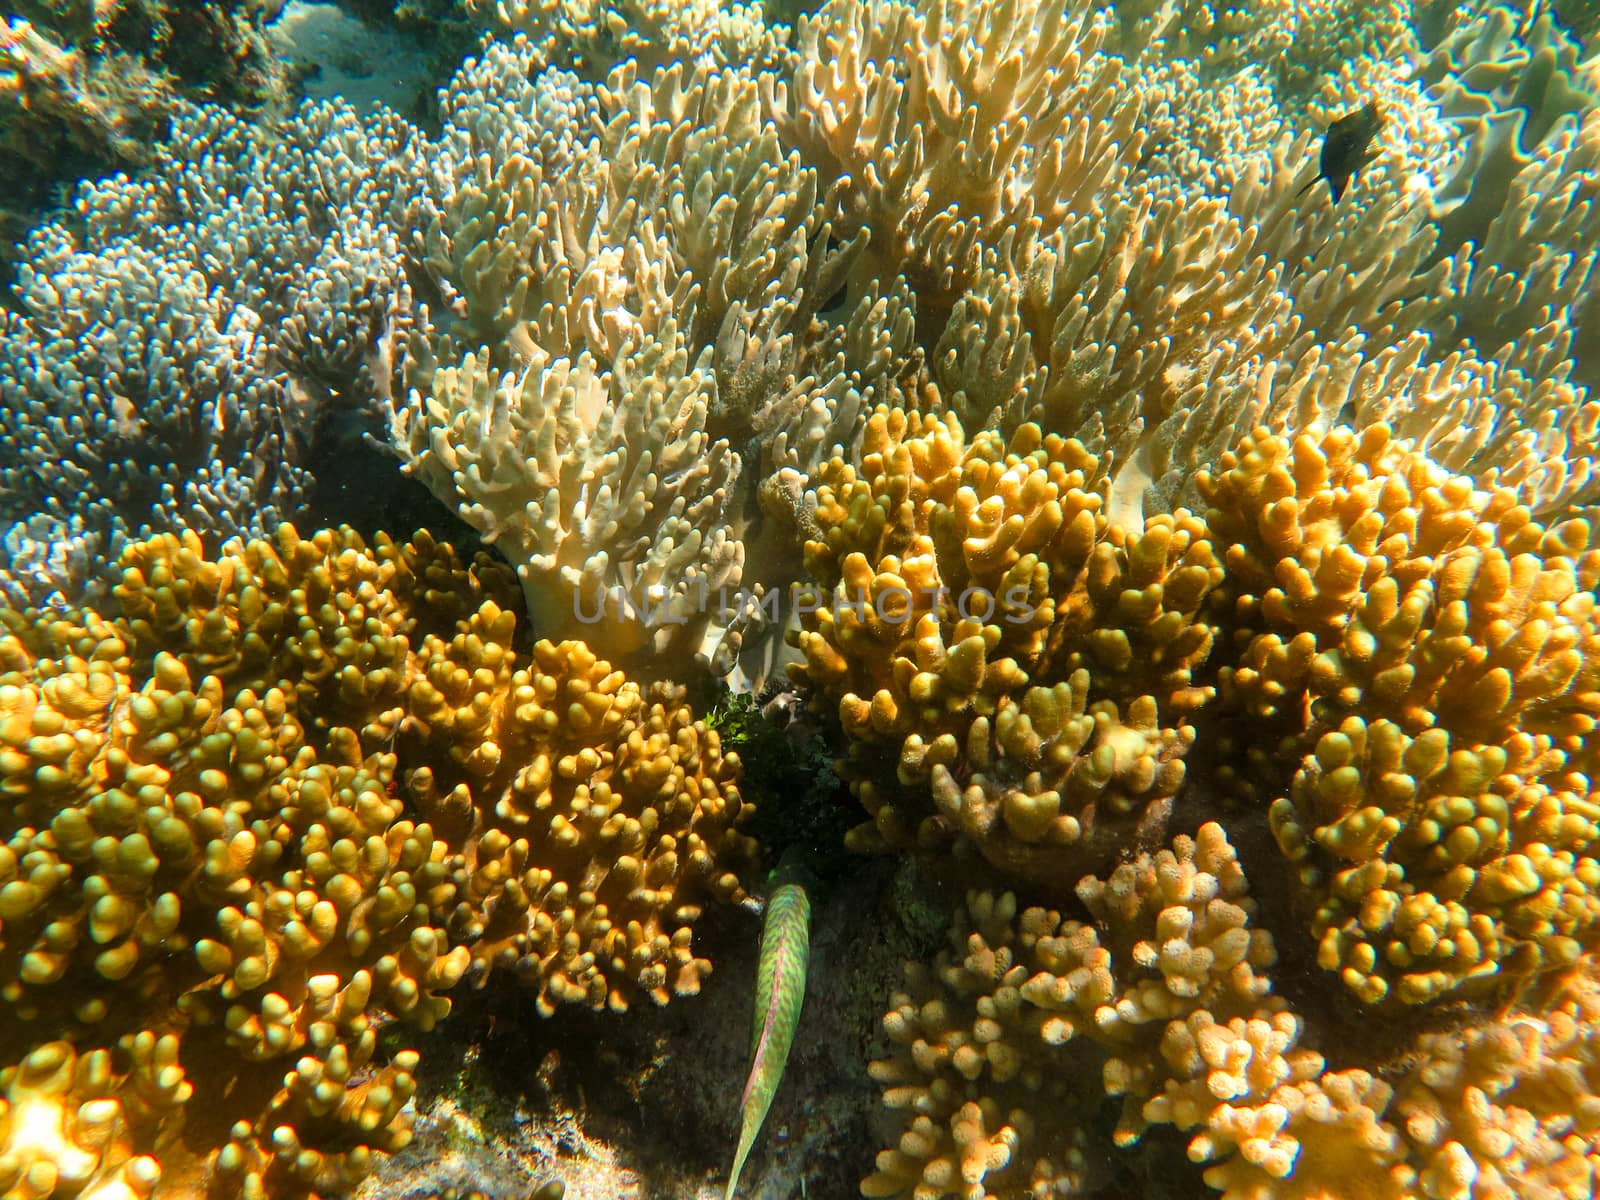 Underwater View of the Great Barrier Reef by NikkiGensert